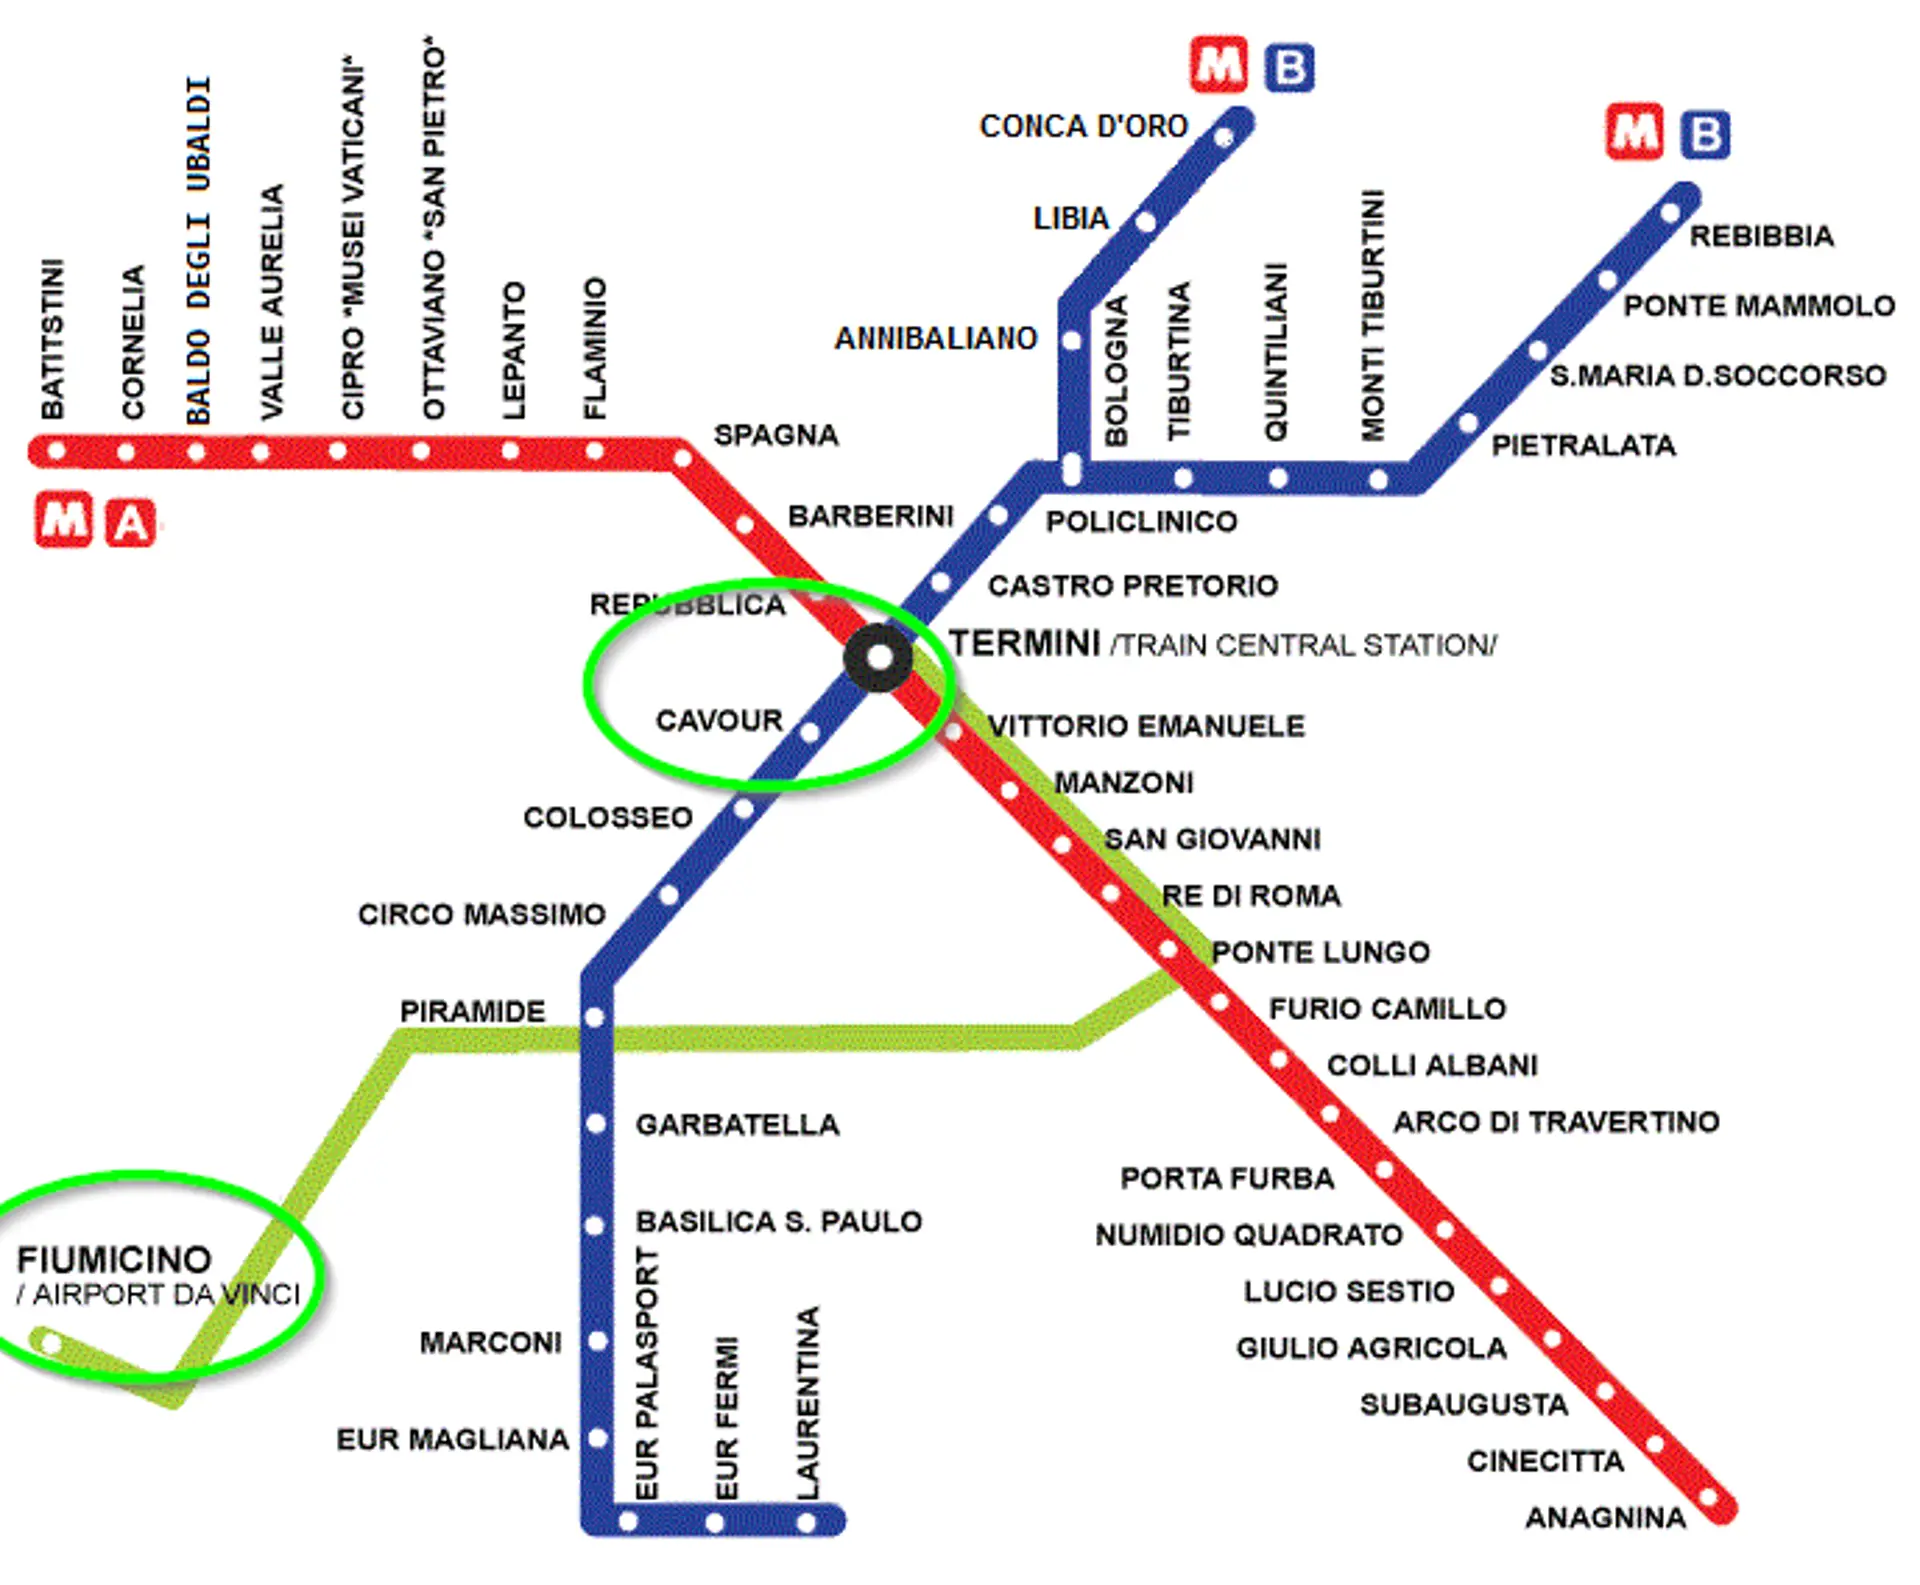 Rom Metro